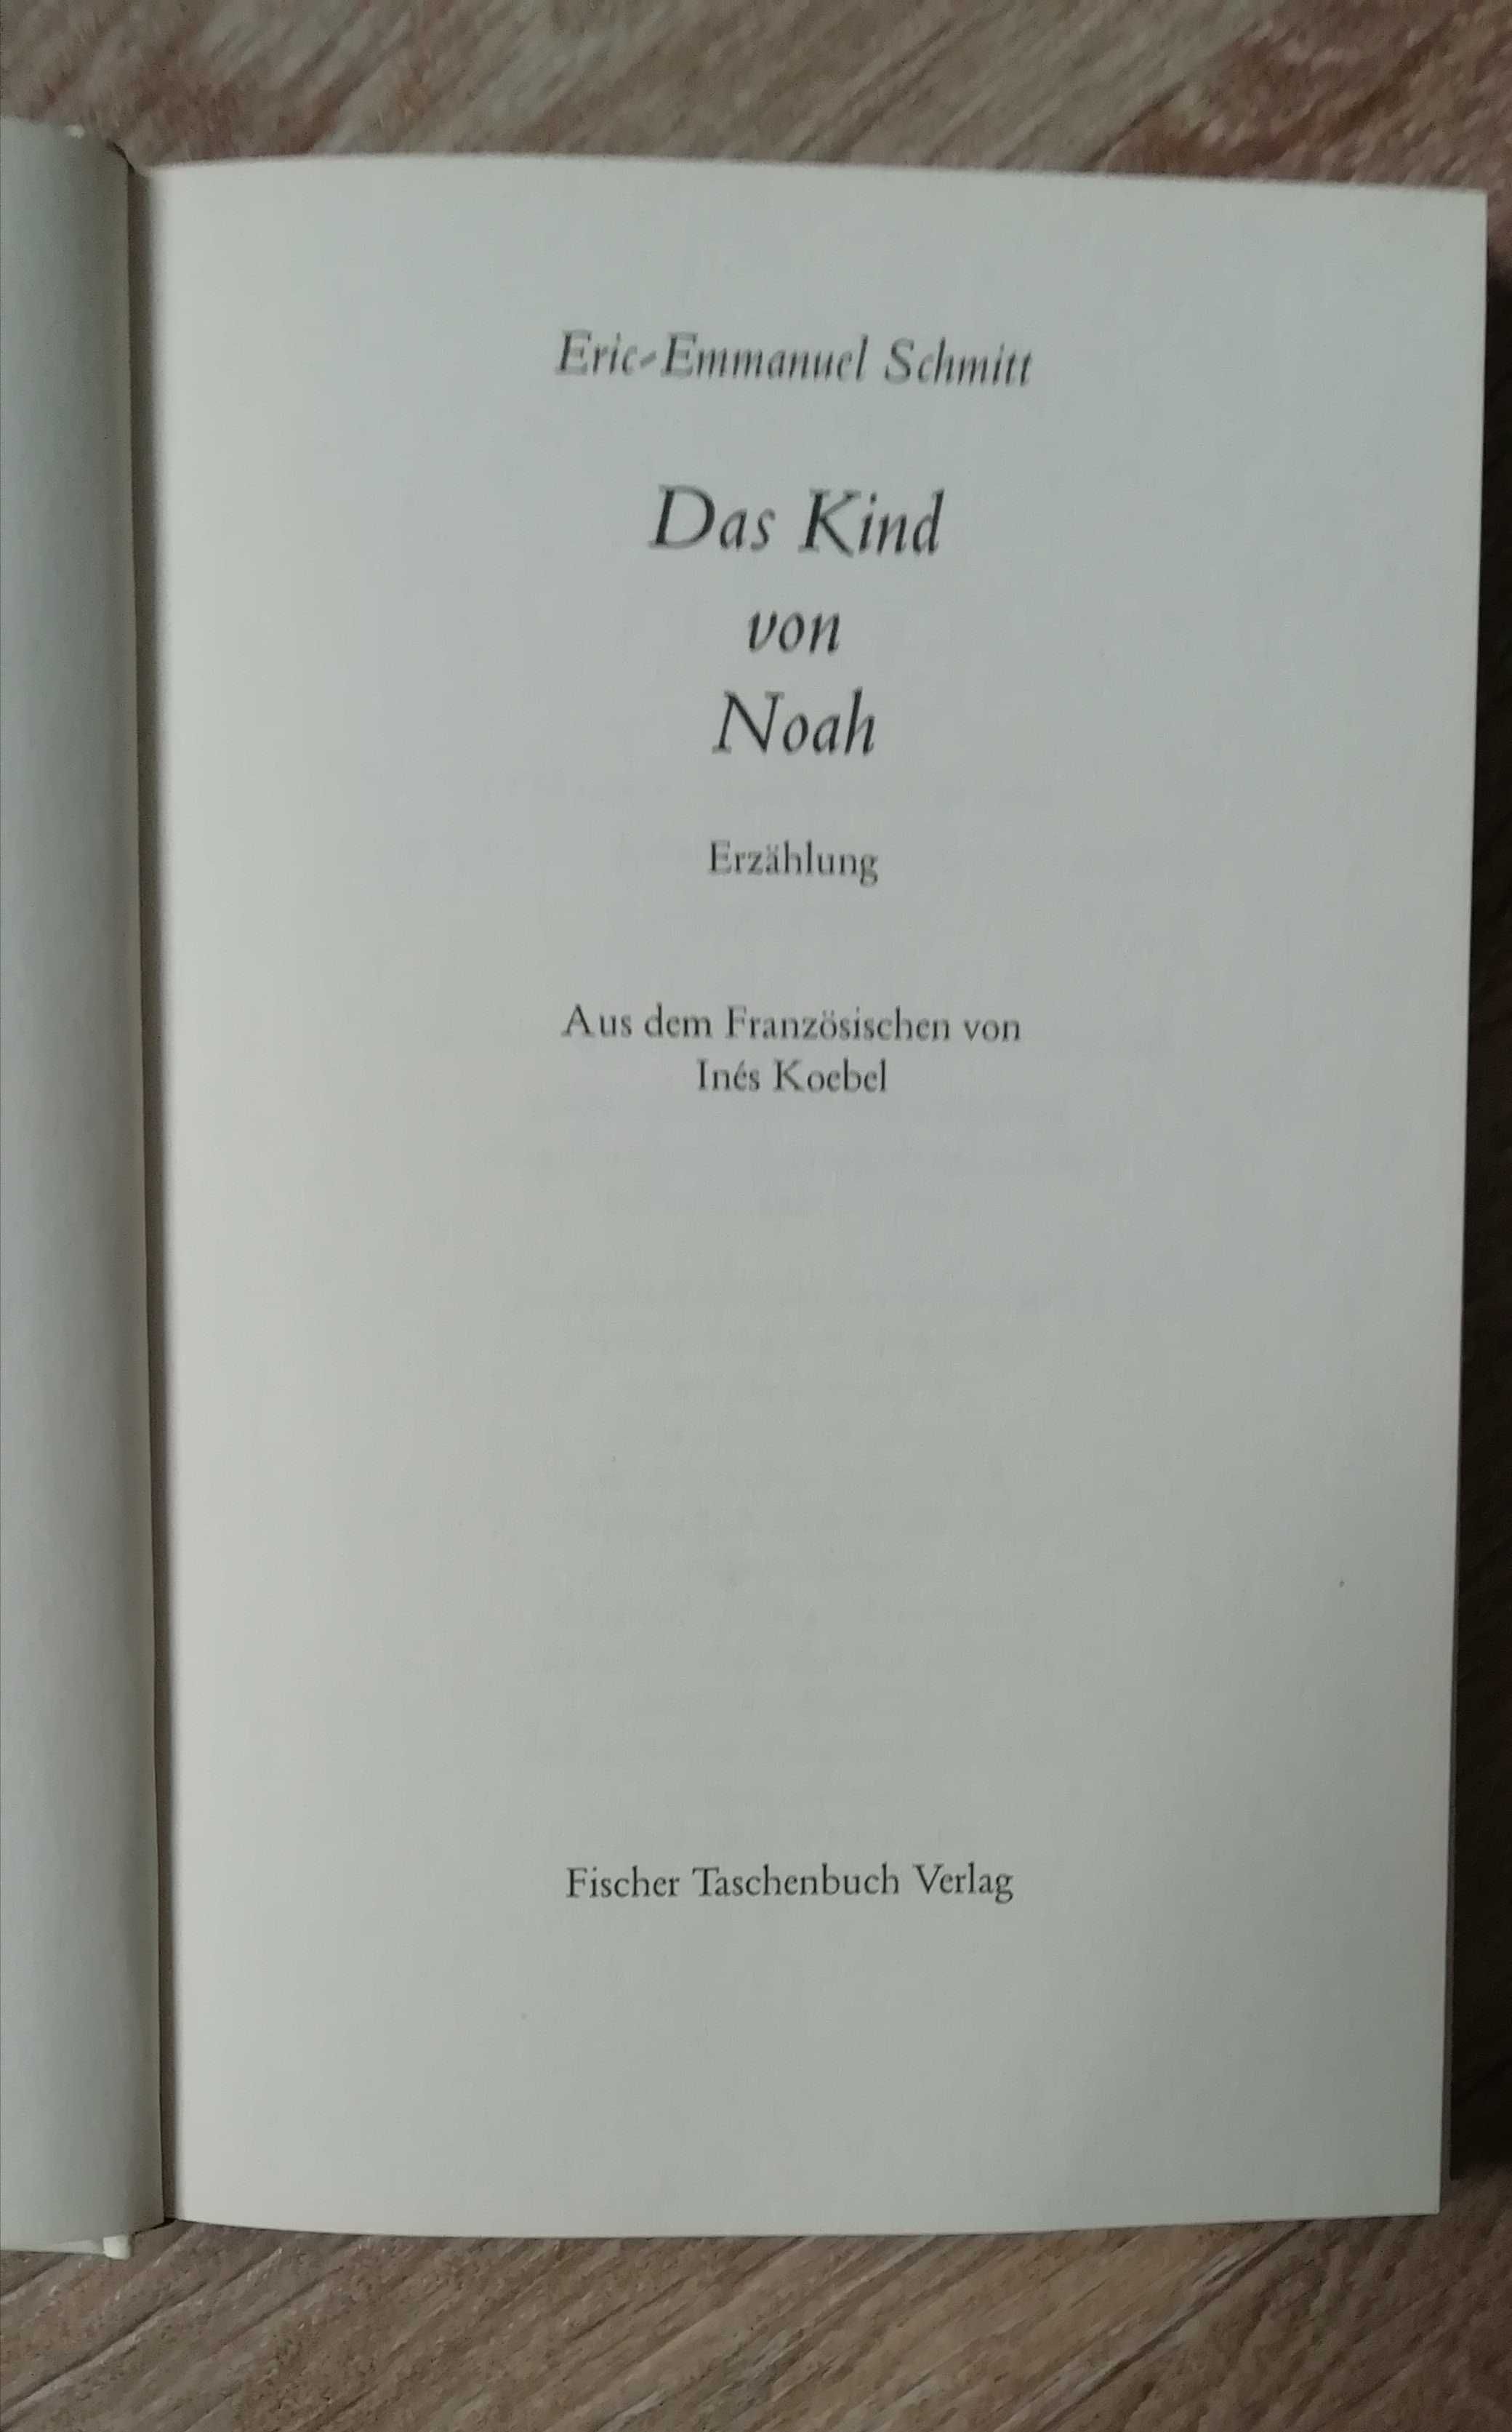 Eric-Emmanuel Schmitt "Das Kind von Noah" на німецькій мові